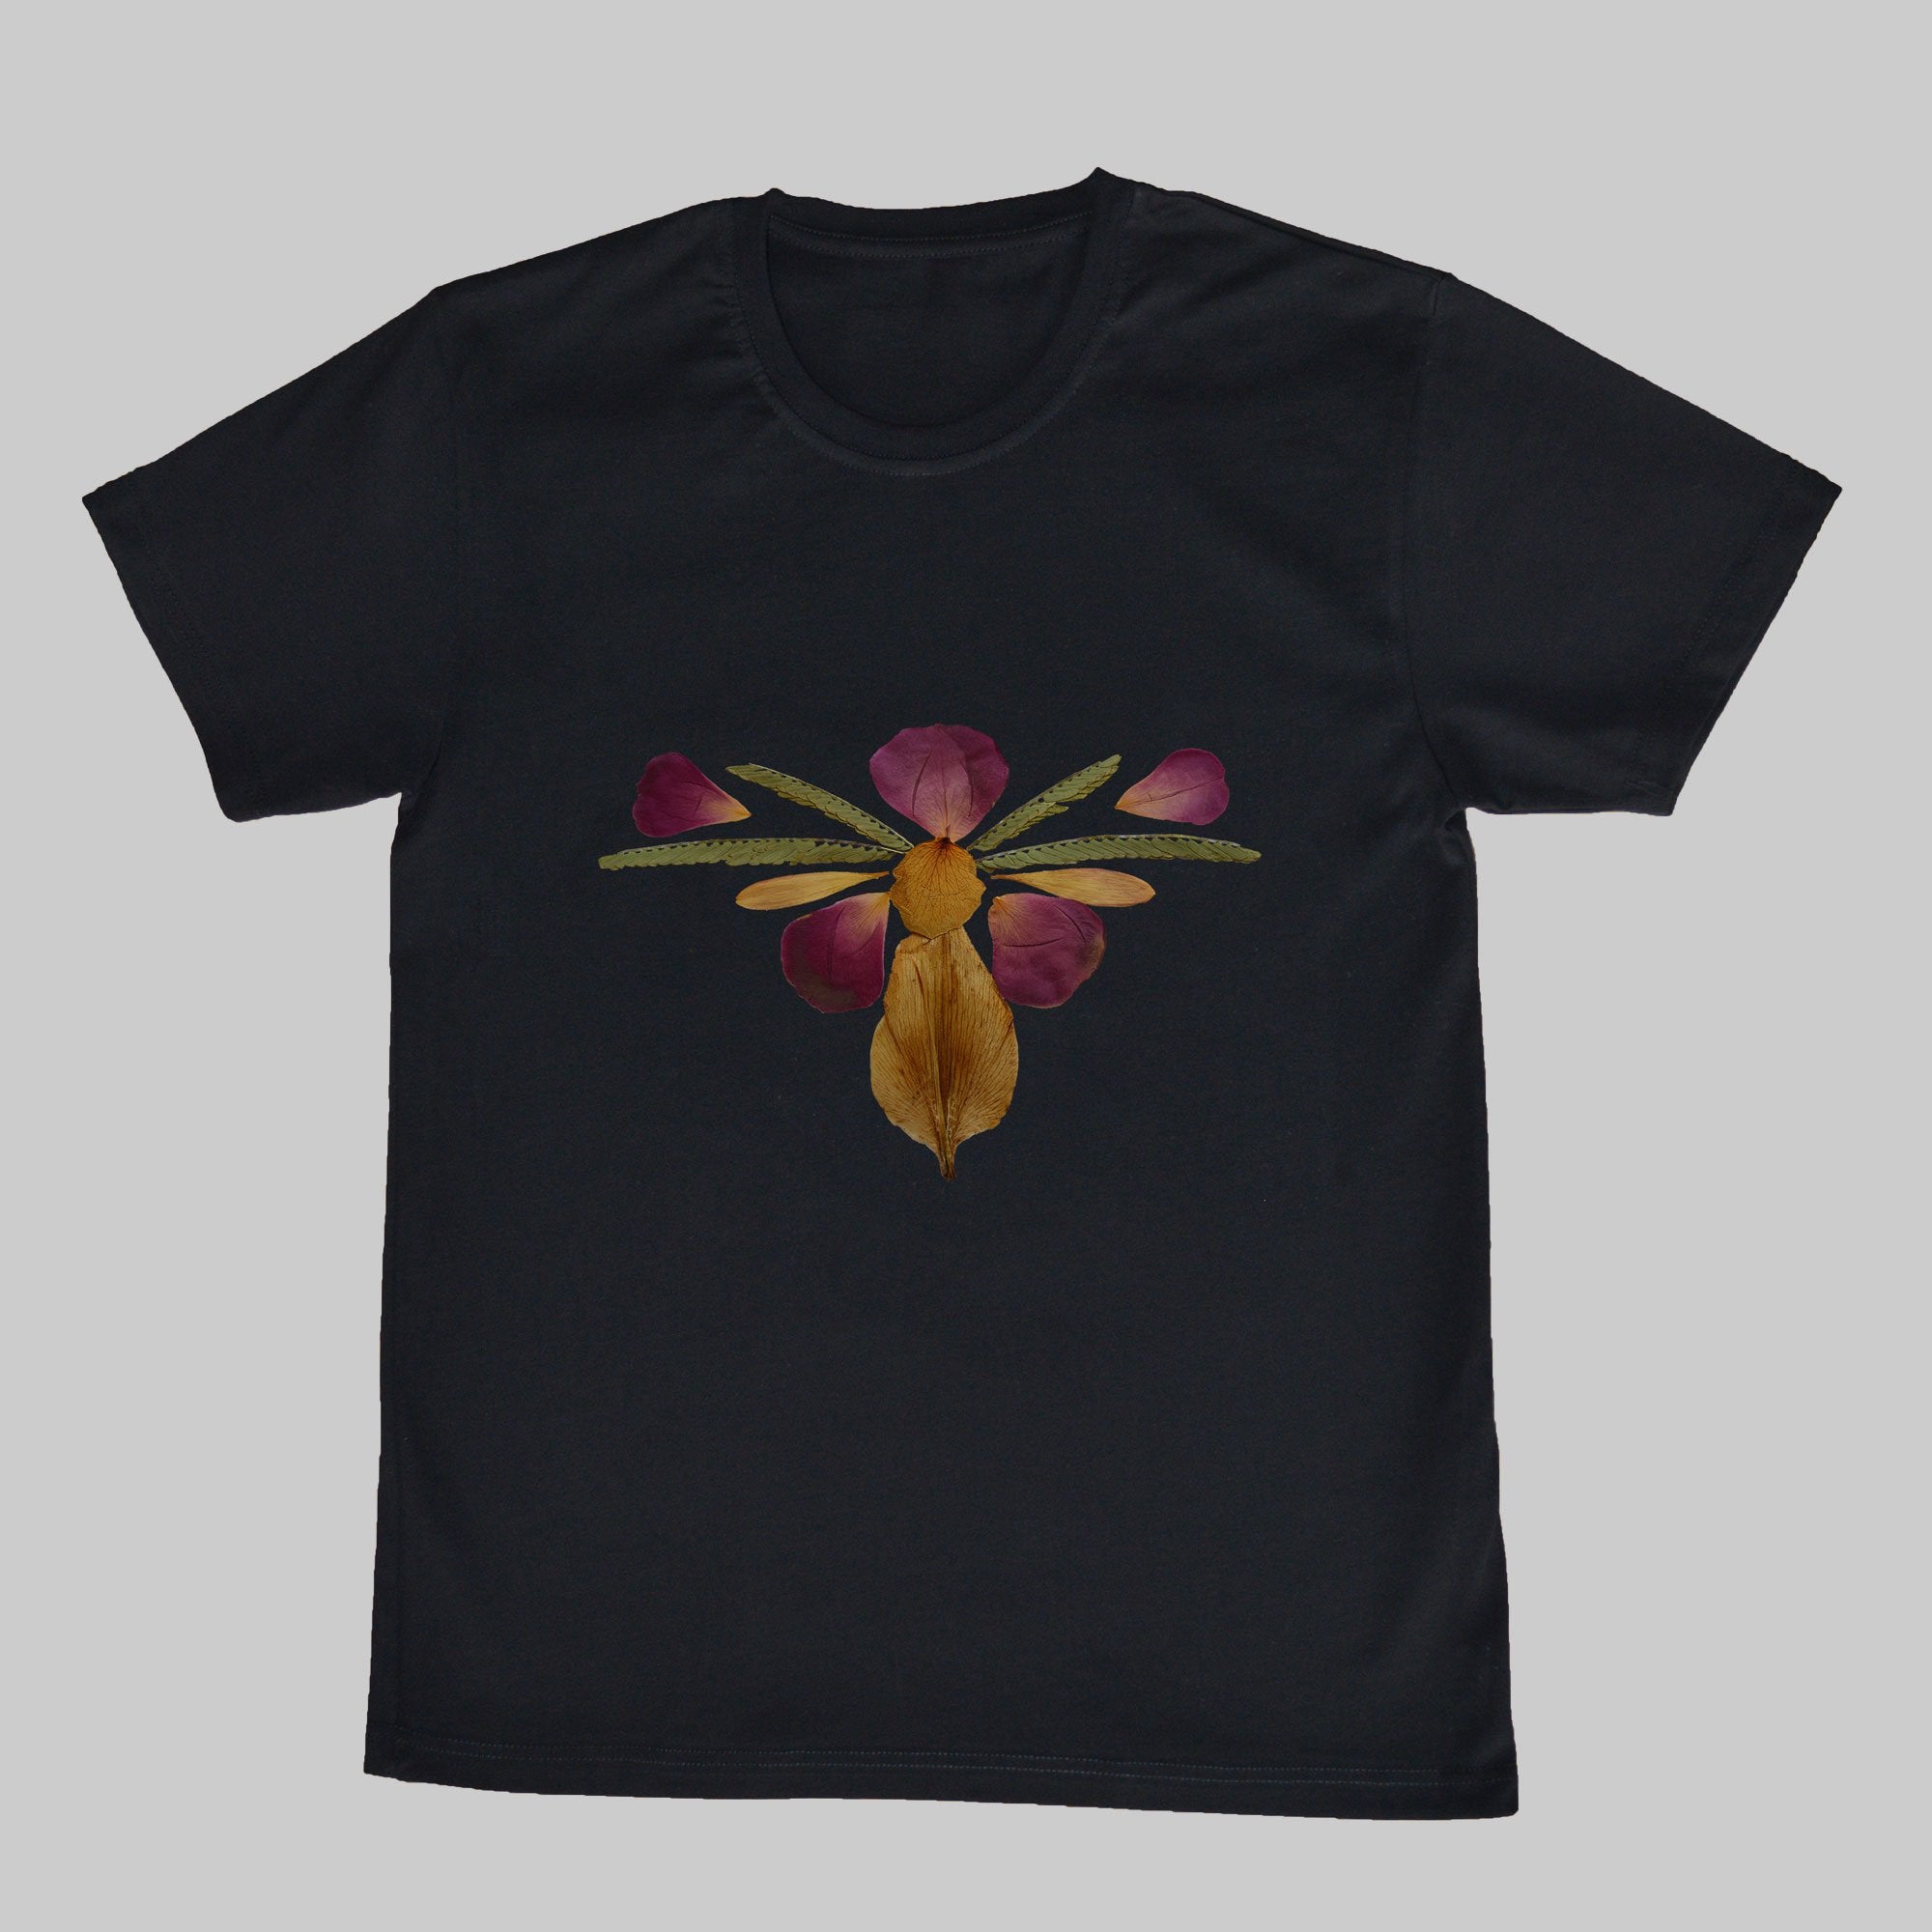 Butterfly-Like Ornament T-Shirt (Men's)